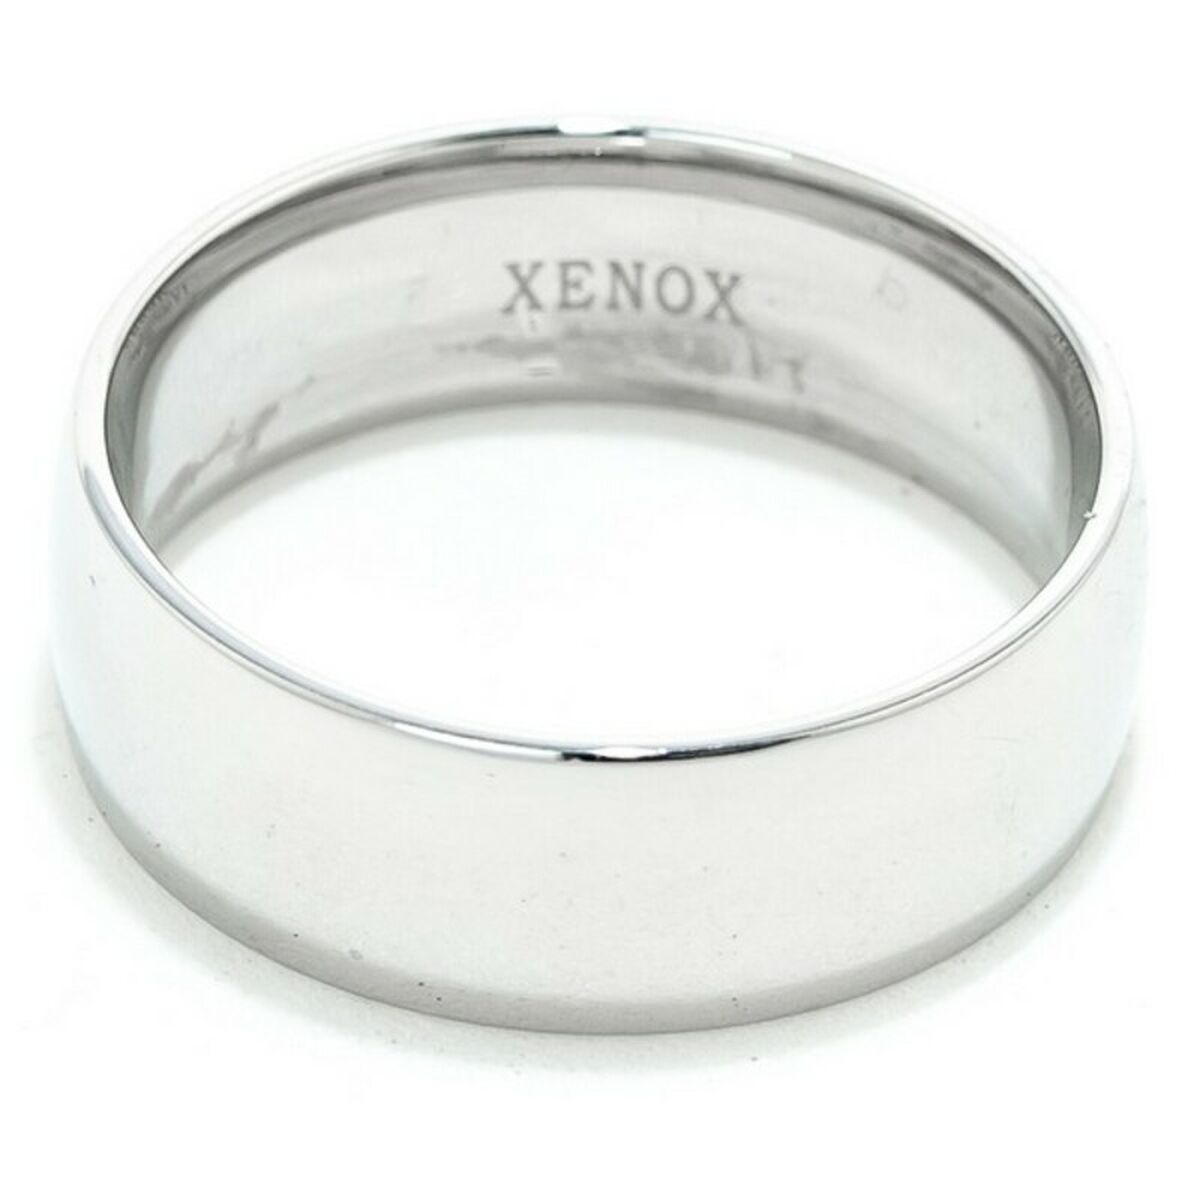 Inel Damă  Xenox X5003 Argintiu - Mărime 10